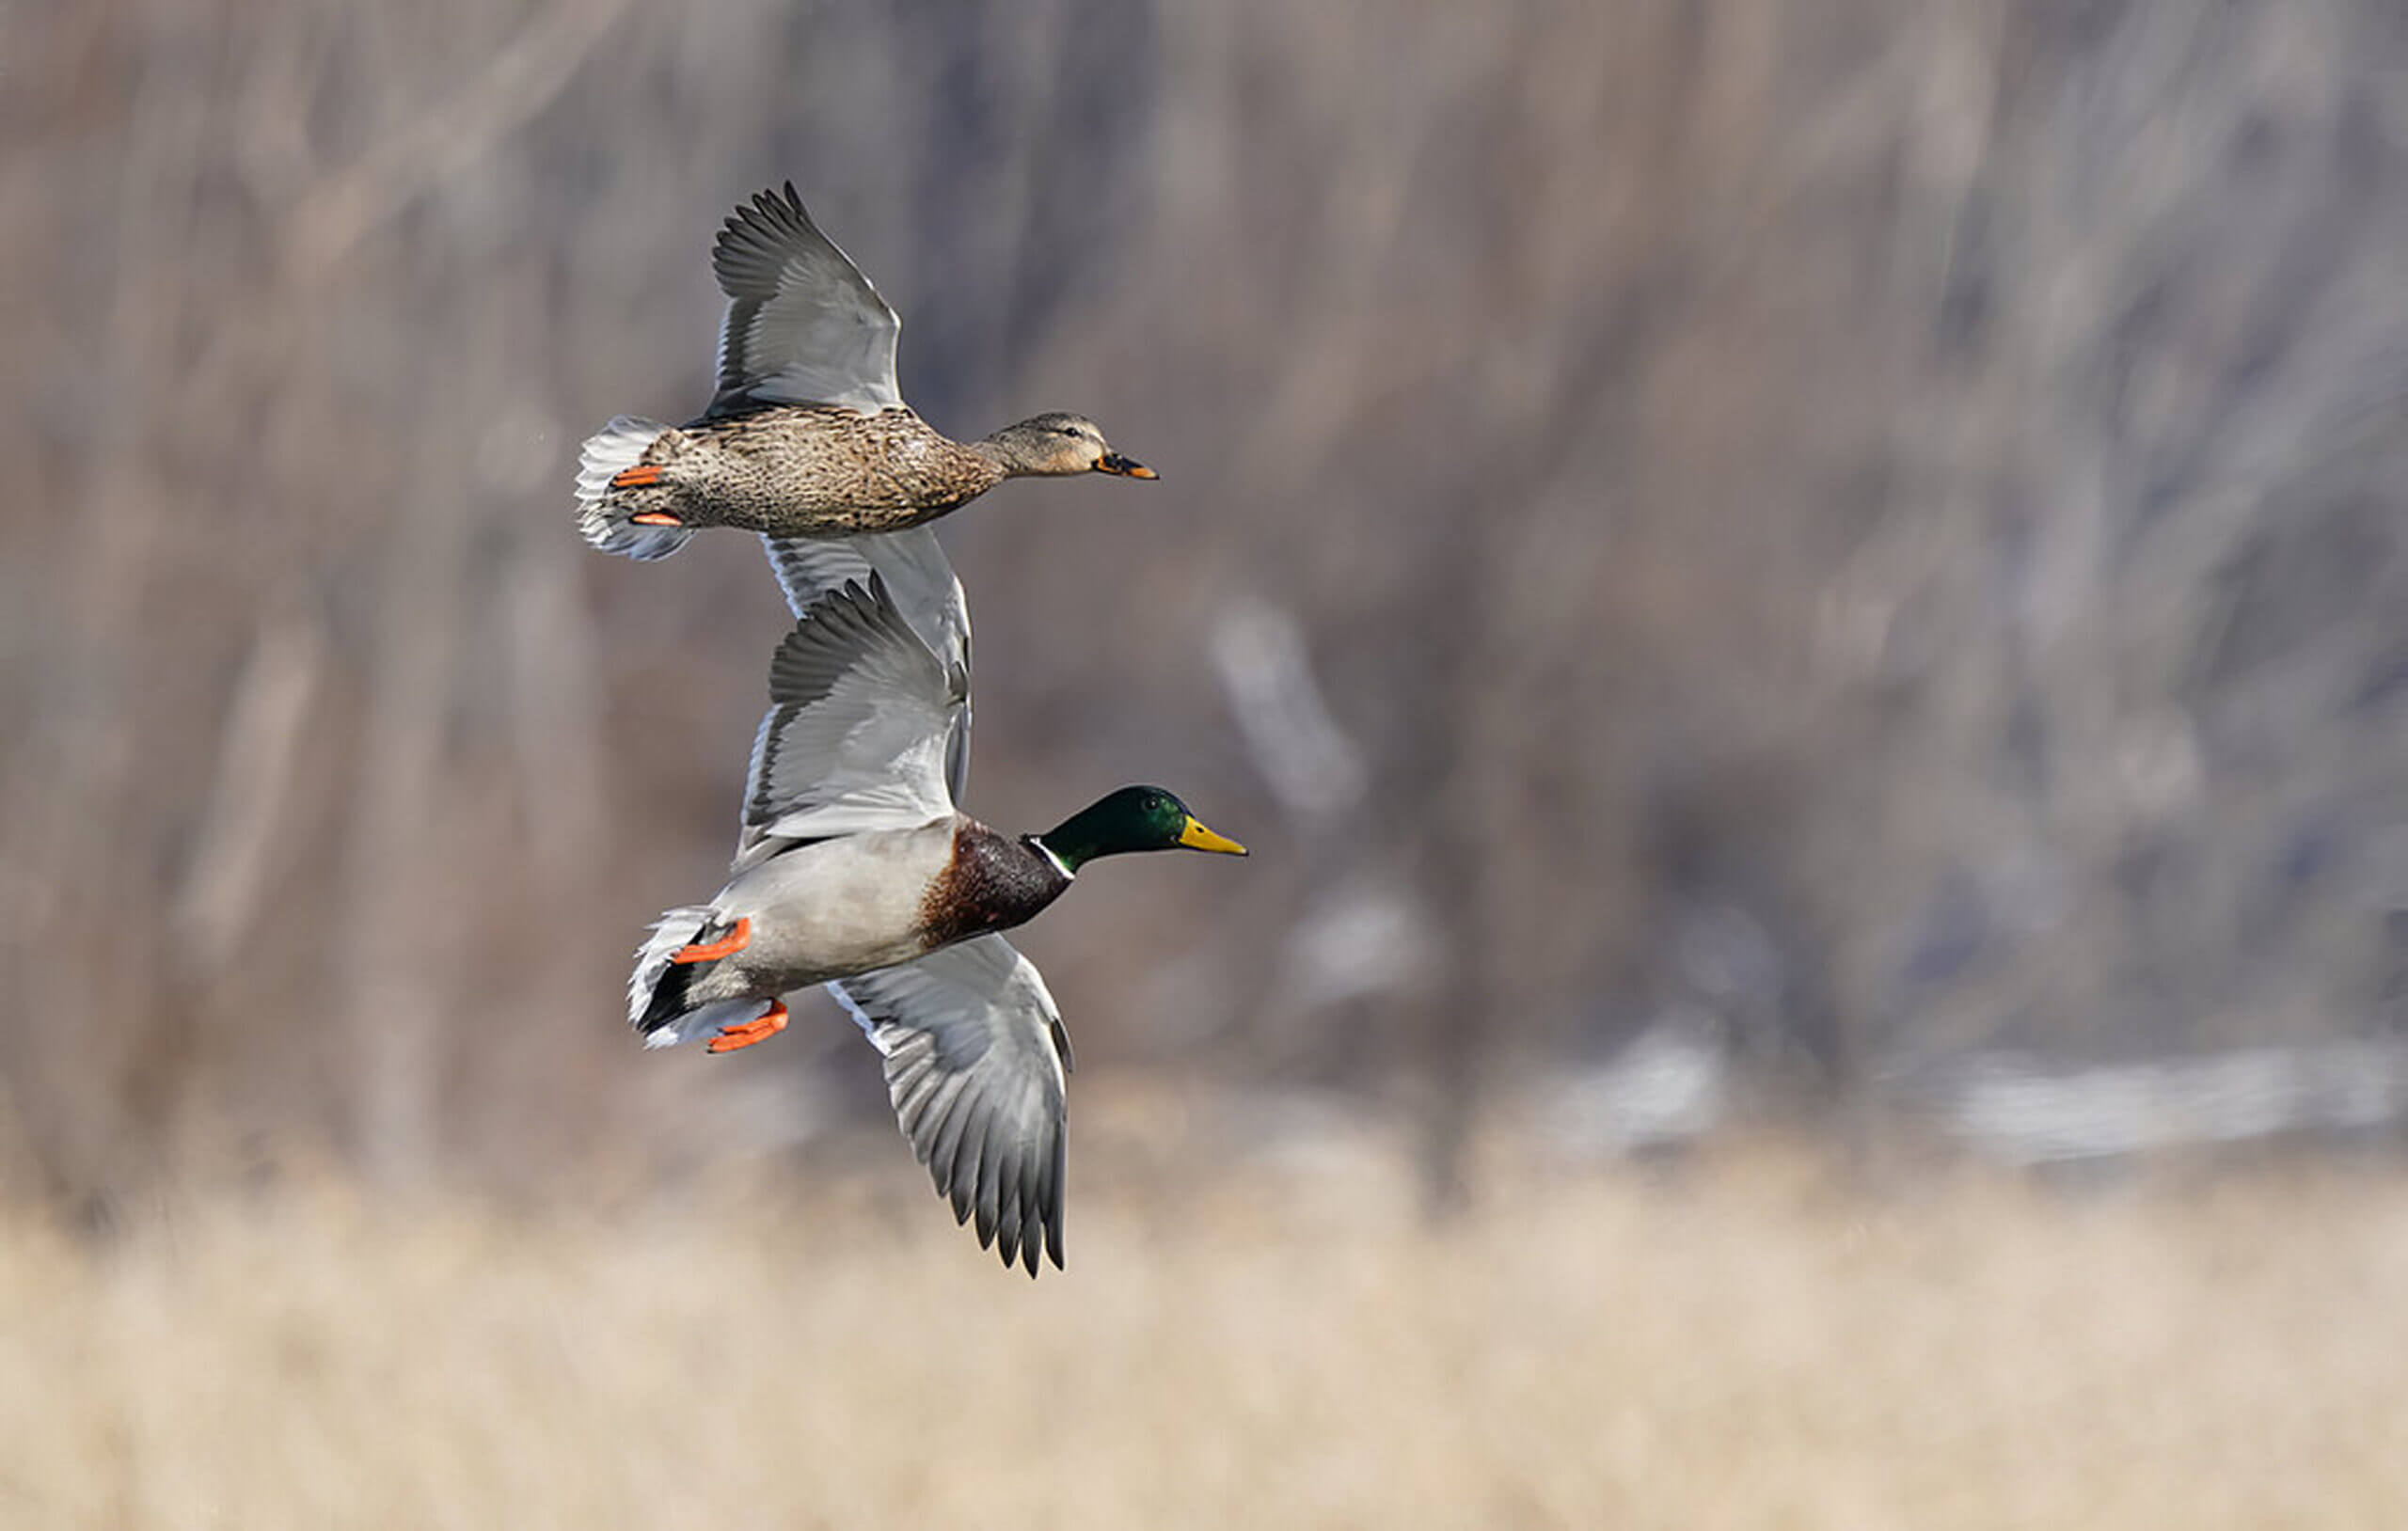 Two ducks flying